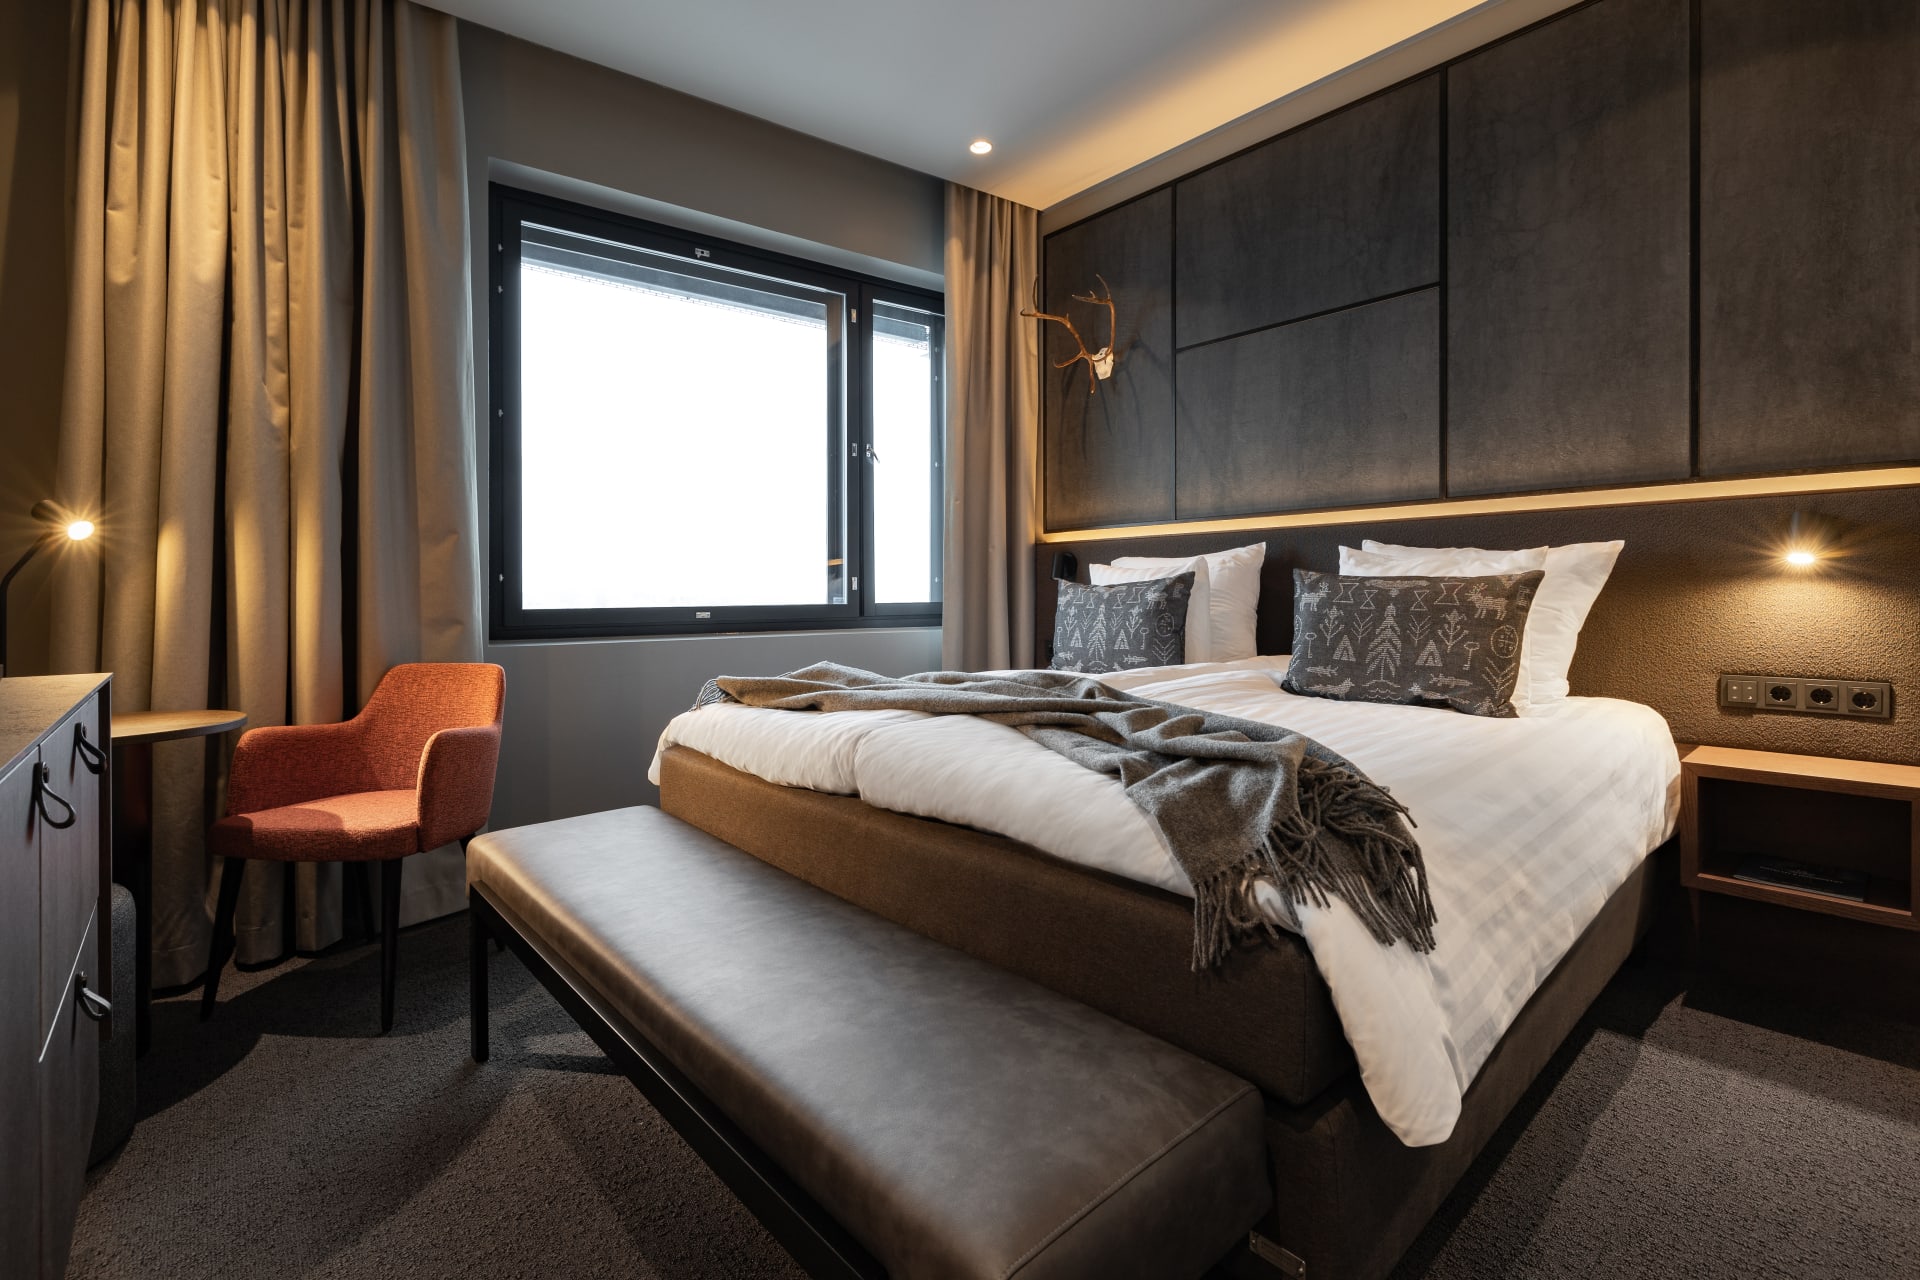 Lapland Hotels Arena Deluxe room